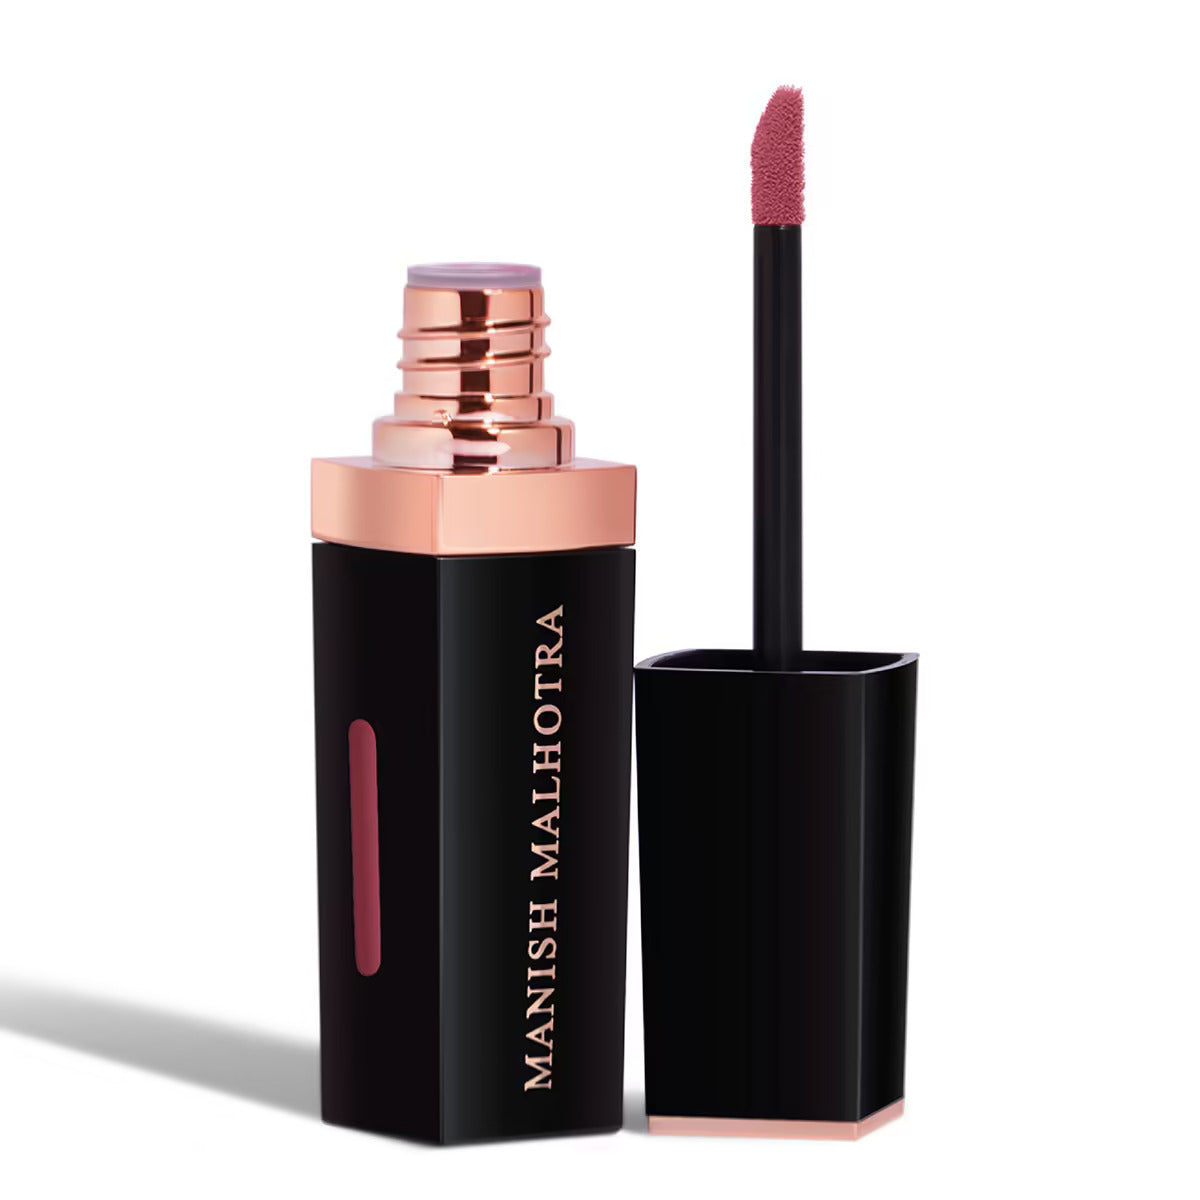 MyGlamm Manish Malhotra Beauty Liquid Matte Lipstick - Muse (7 g)